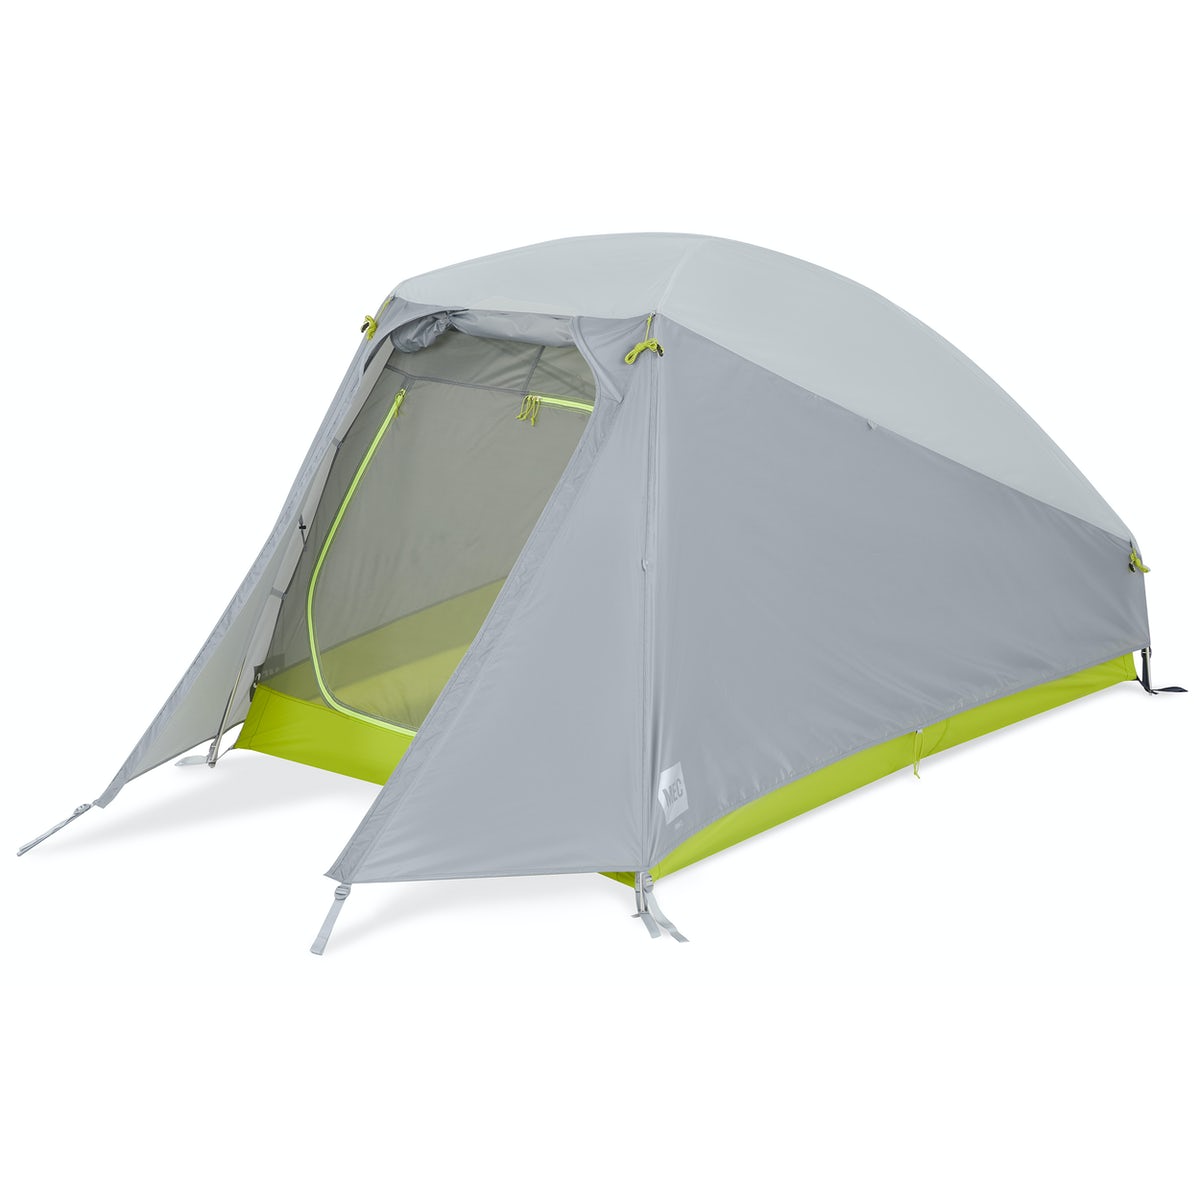 Neo 2 tent - 2 person